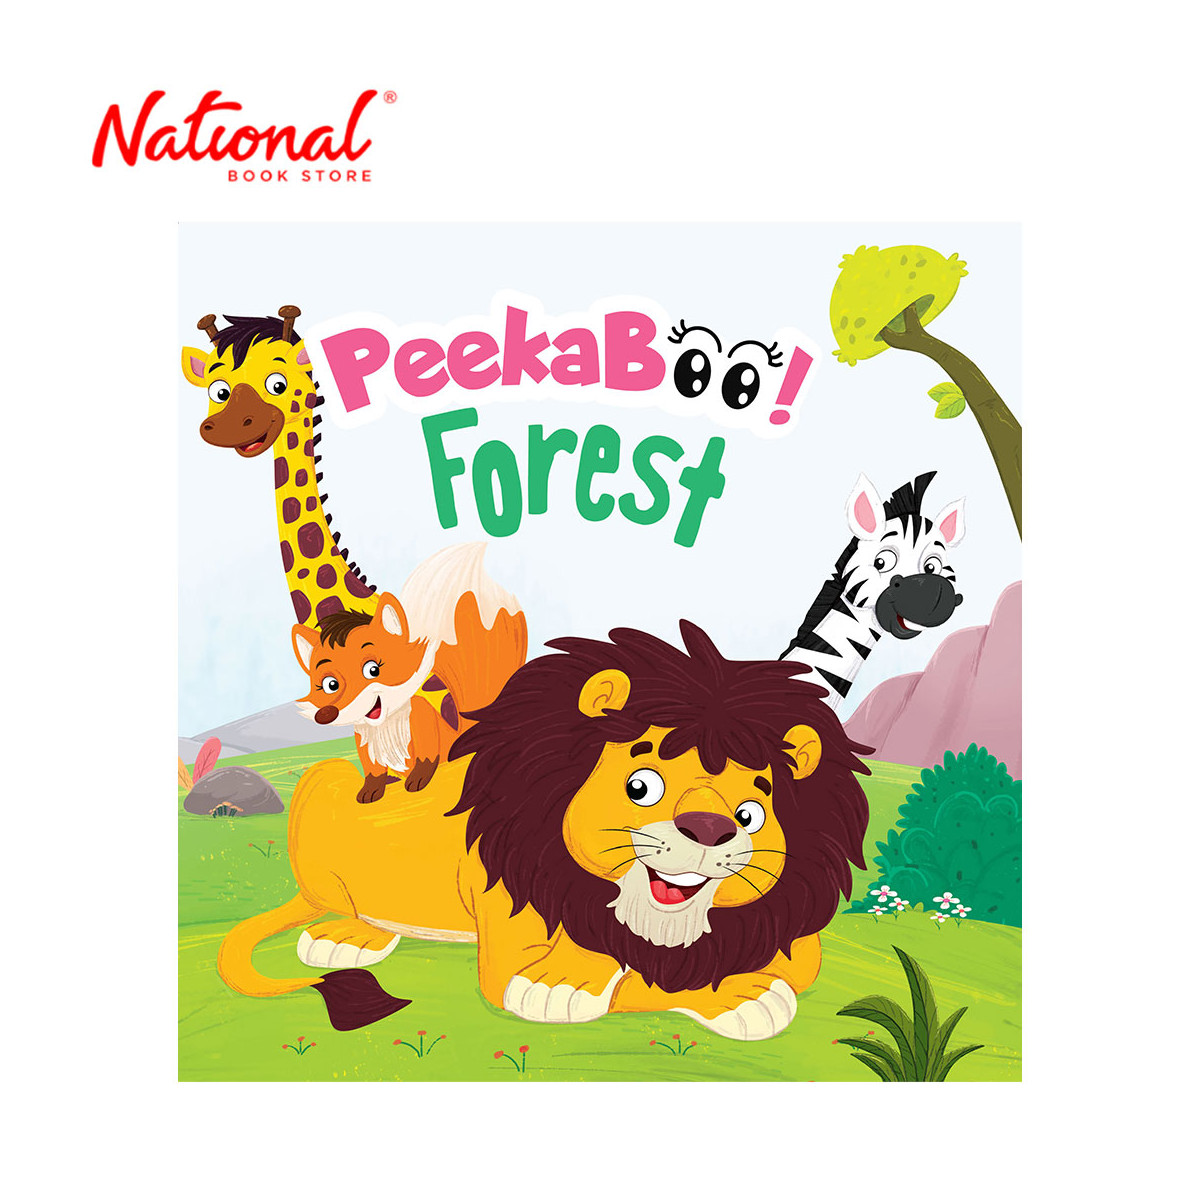 Peekaboo! - Board Book - Picture Books for Kids - Preschool